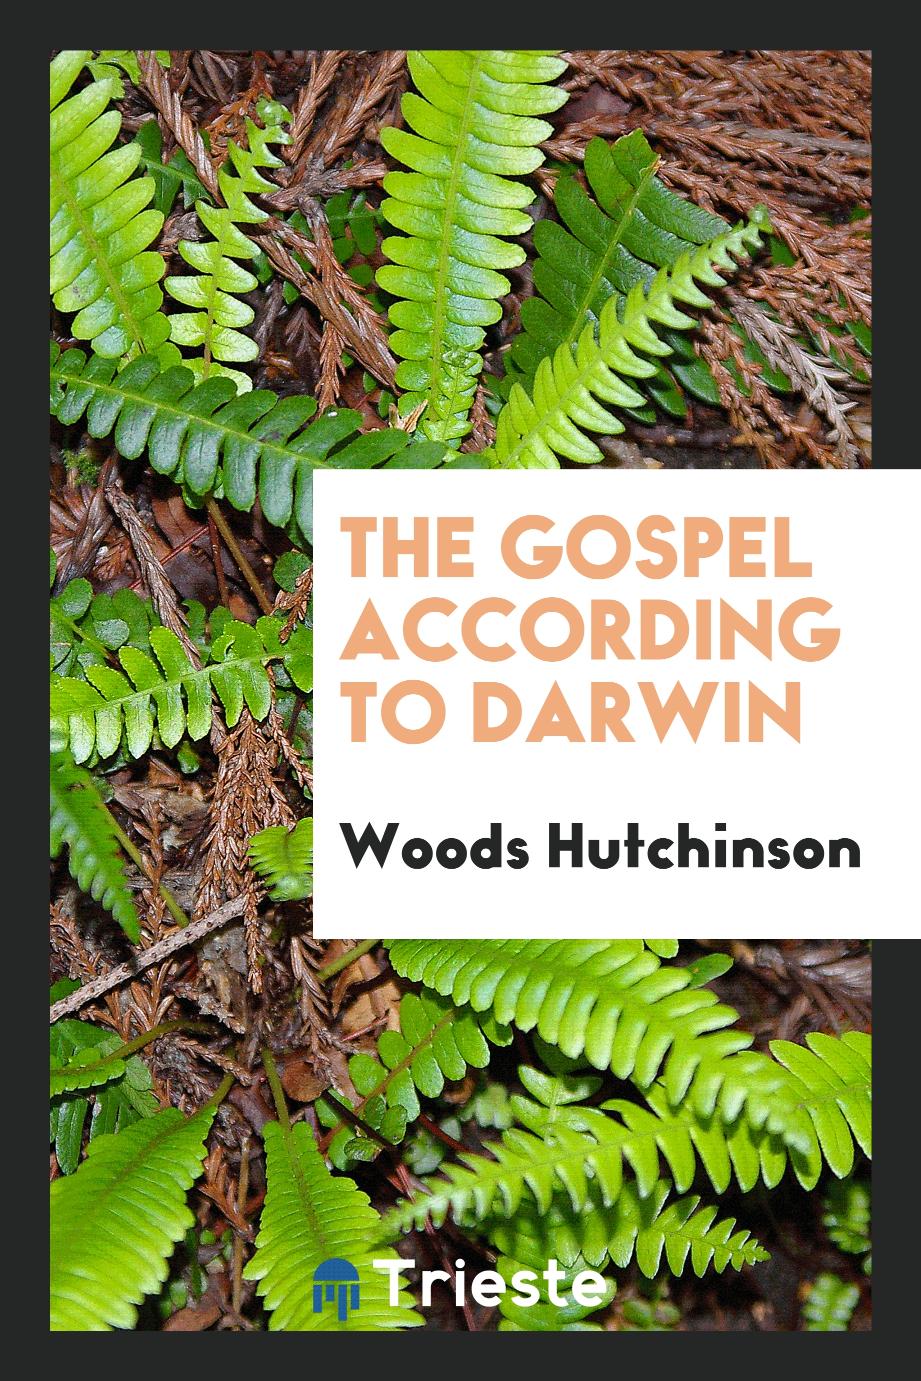 The Gospel according to Darwin